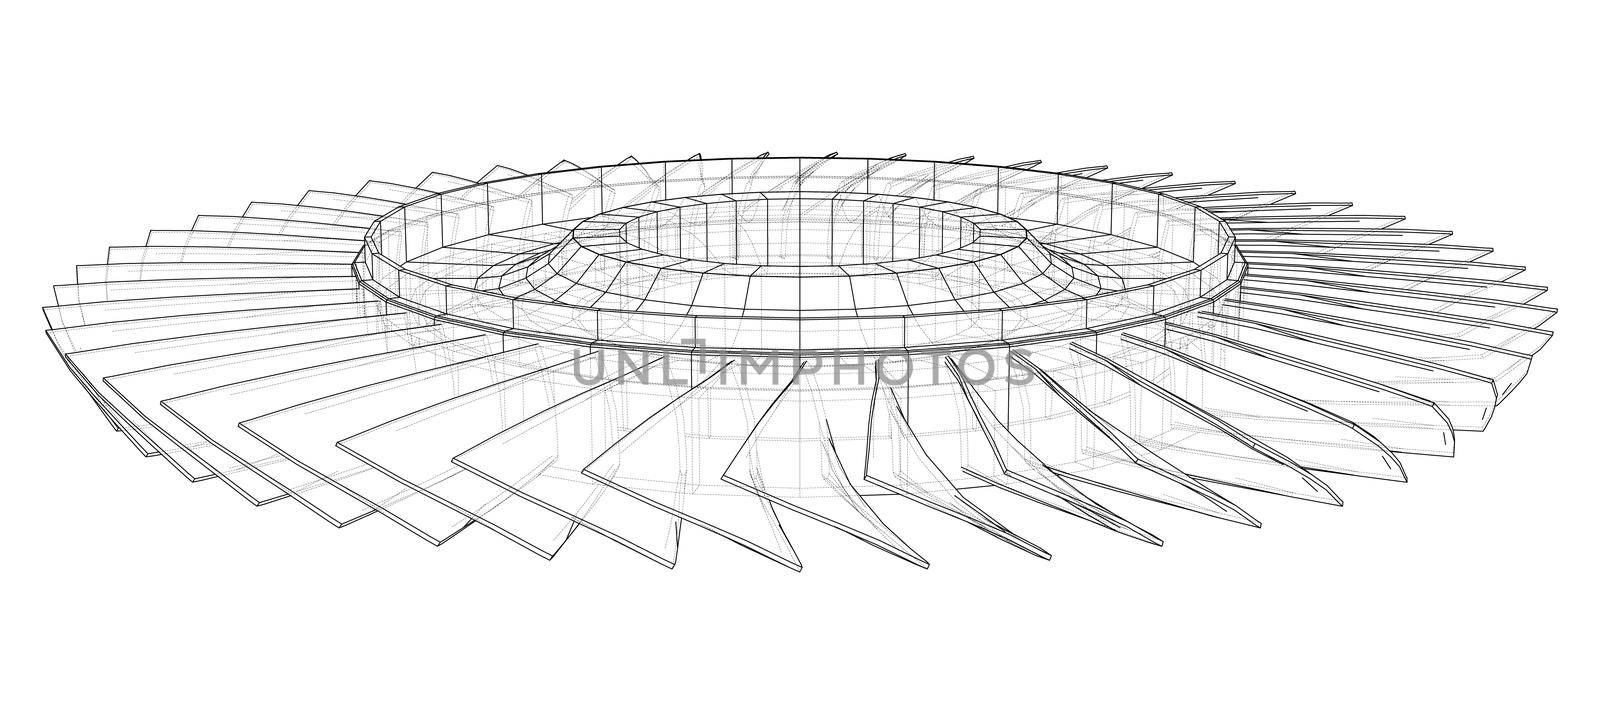 Turbine wheel concept outline. 3d illustration. Wire-frame style